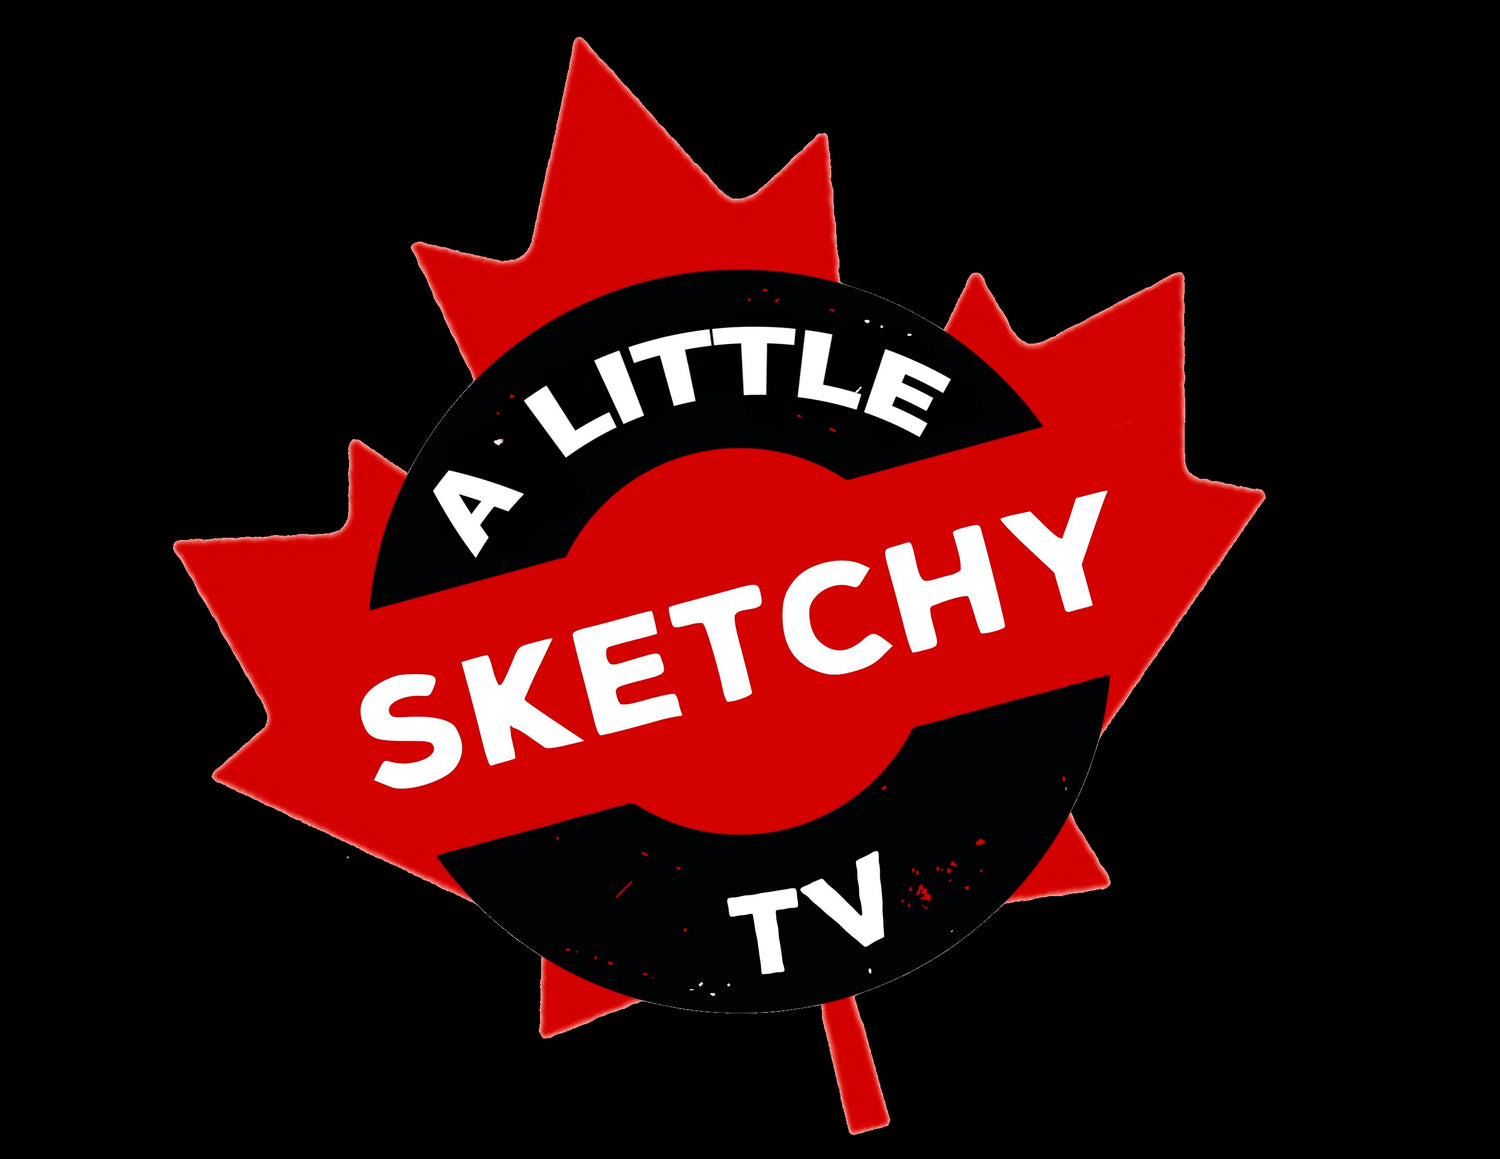 A Little Sketchy TV